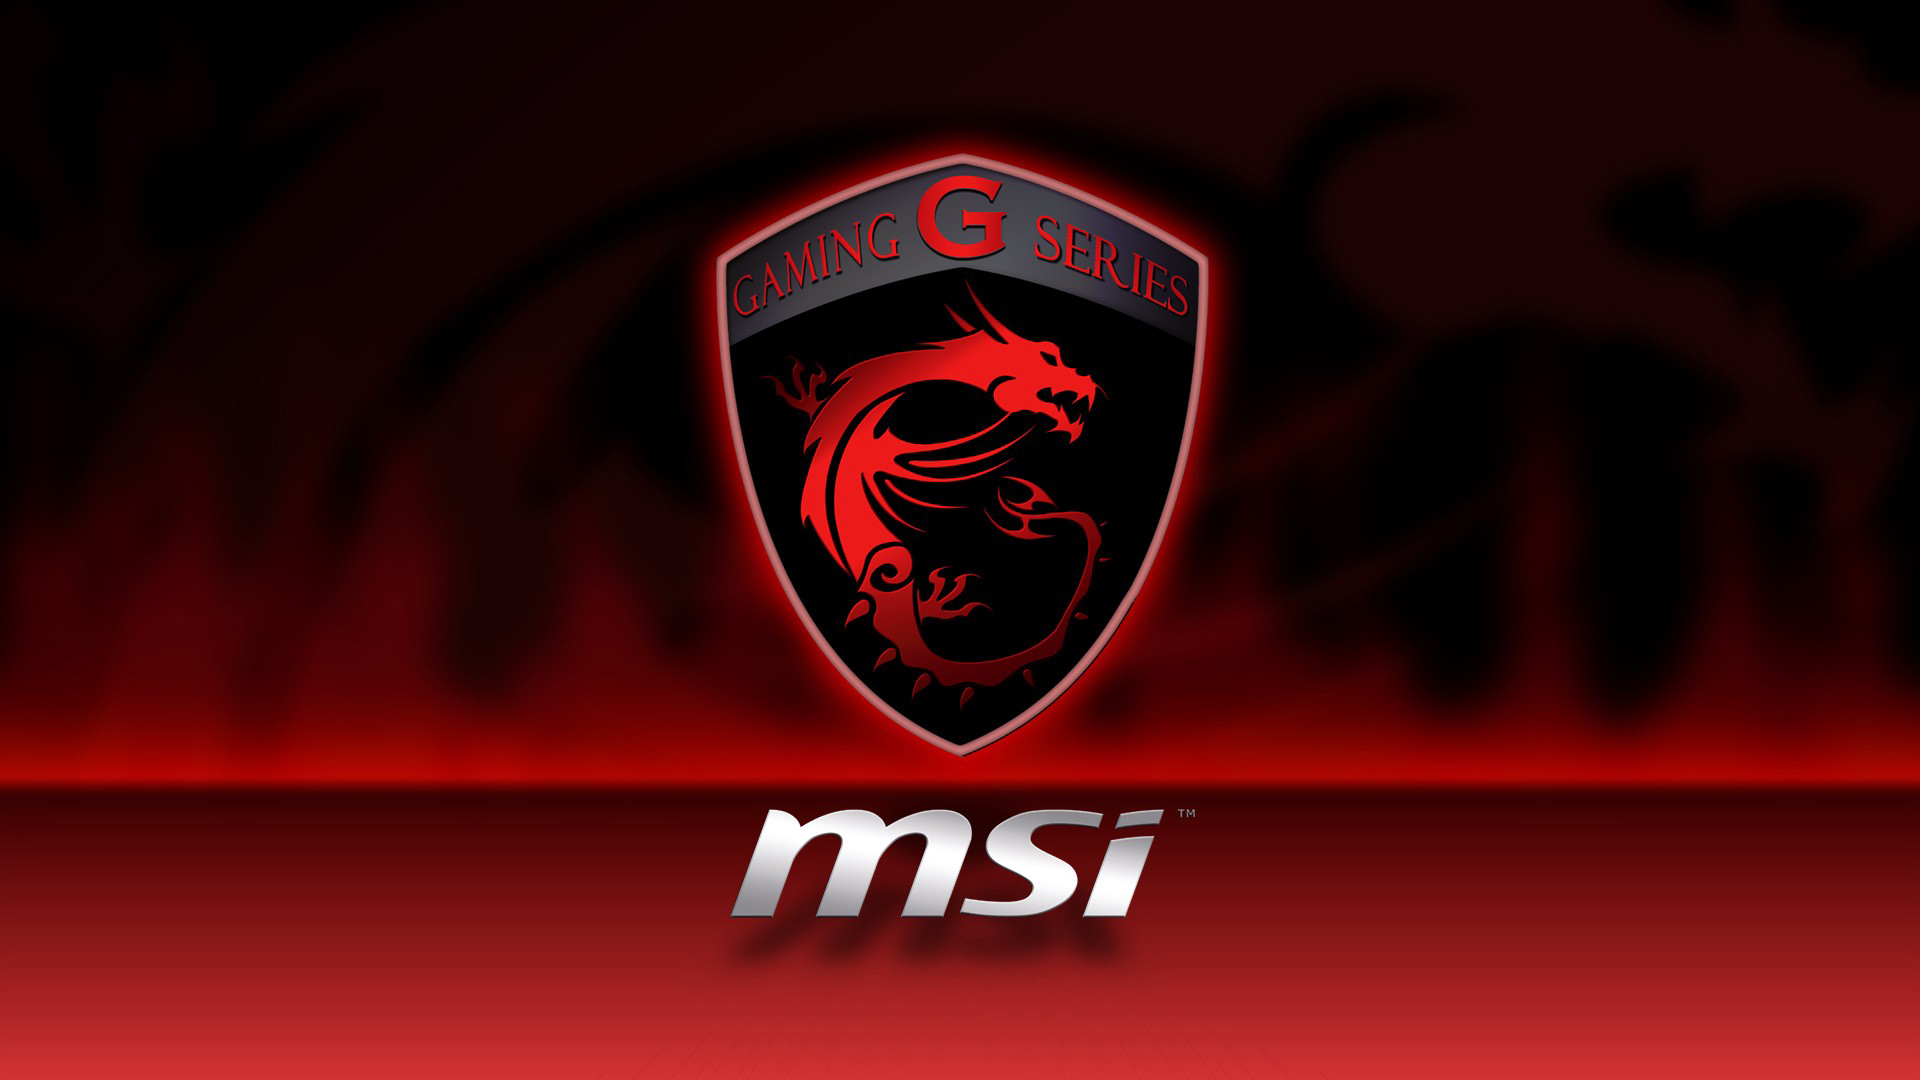 msi gaming g series dragon logo hd 1920x1080